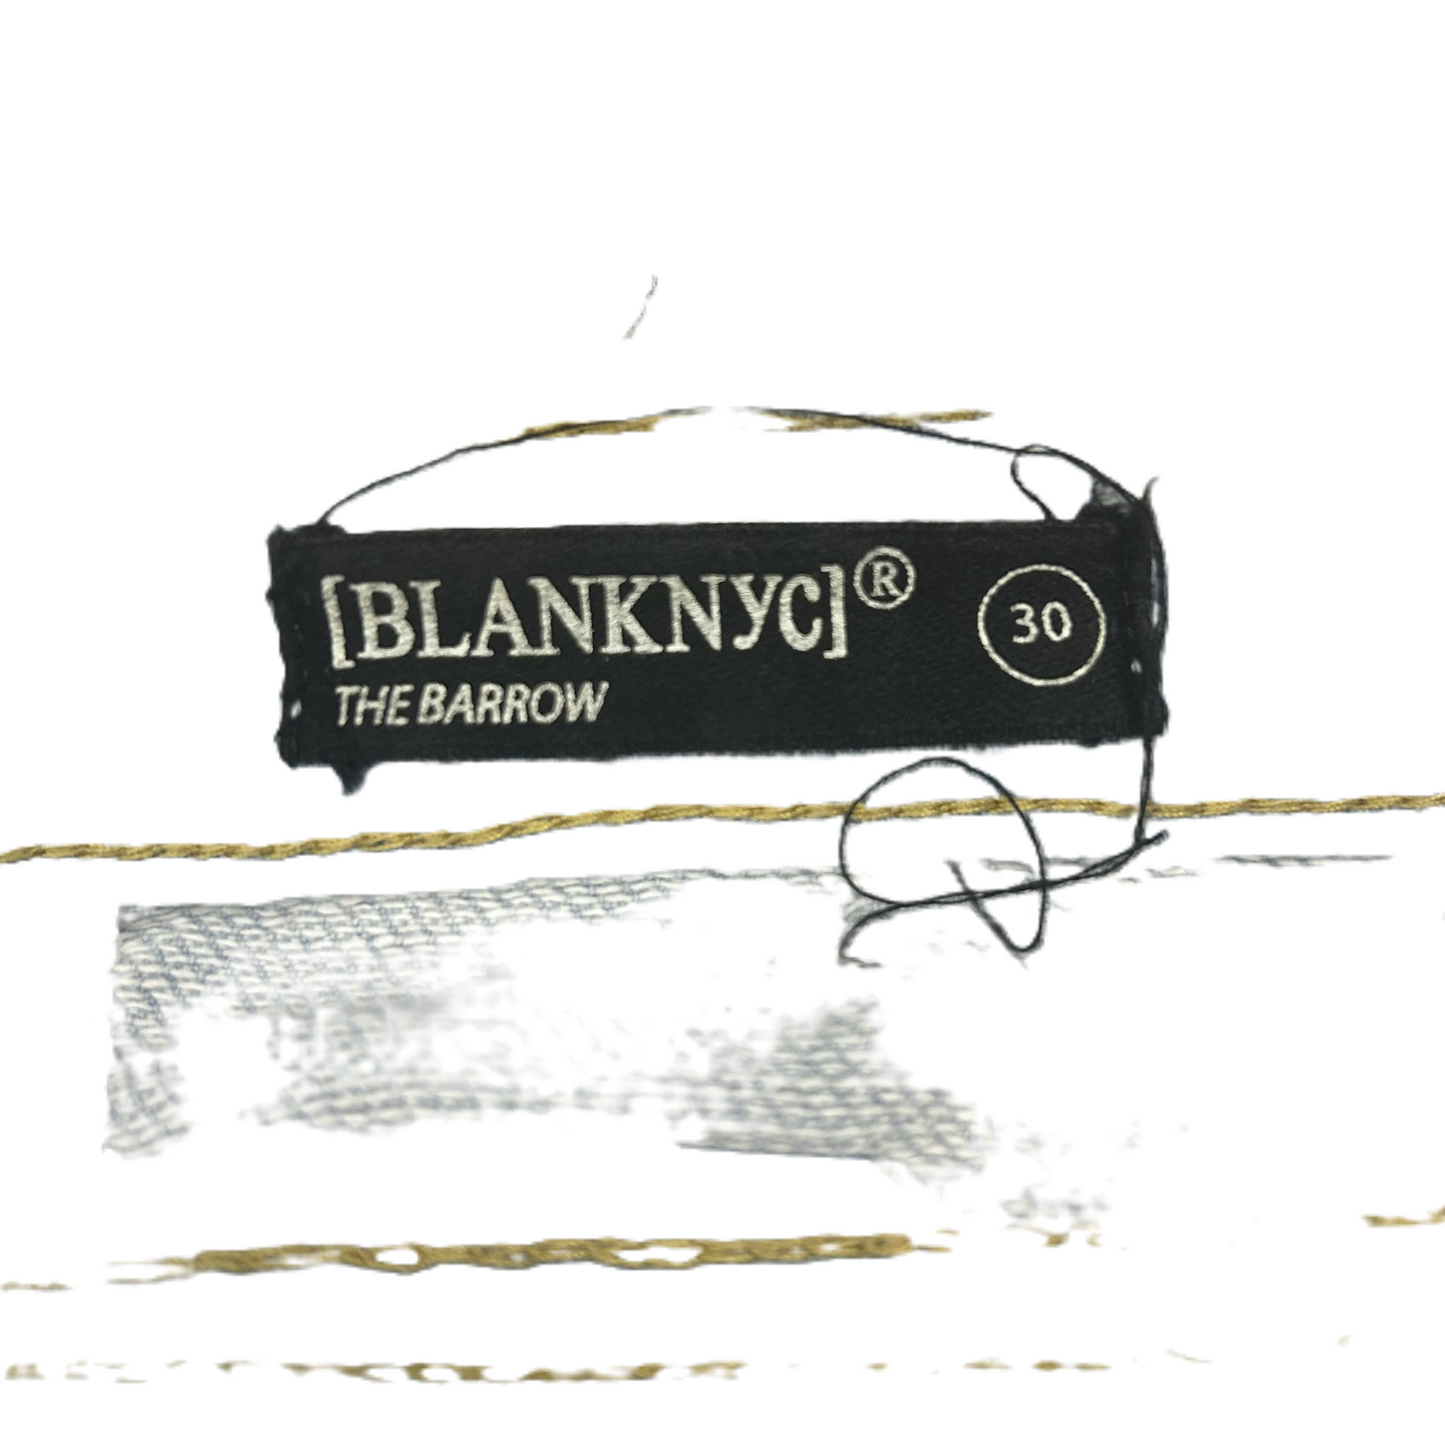 Shorts By Blanknyc  Size: 10